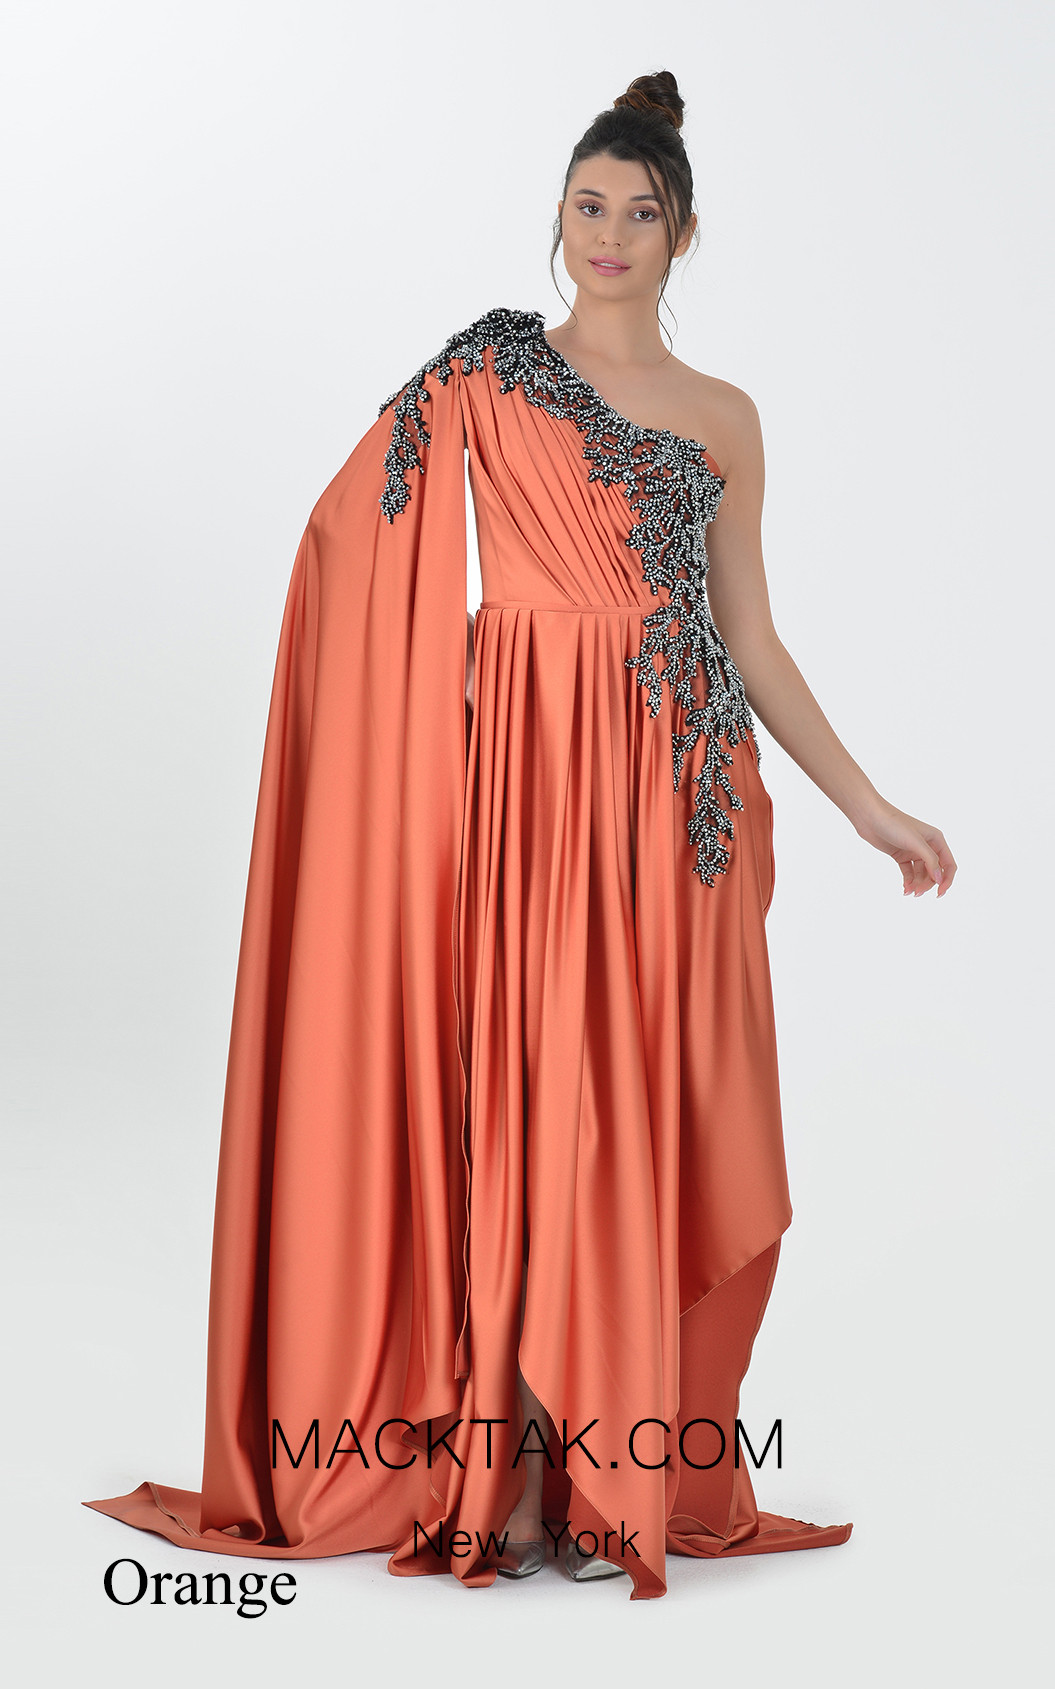 Macktak Couture 5170 Orange Front Dress